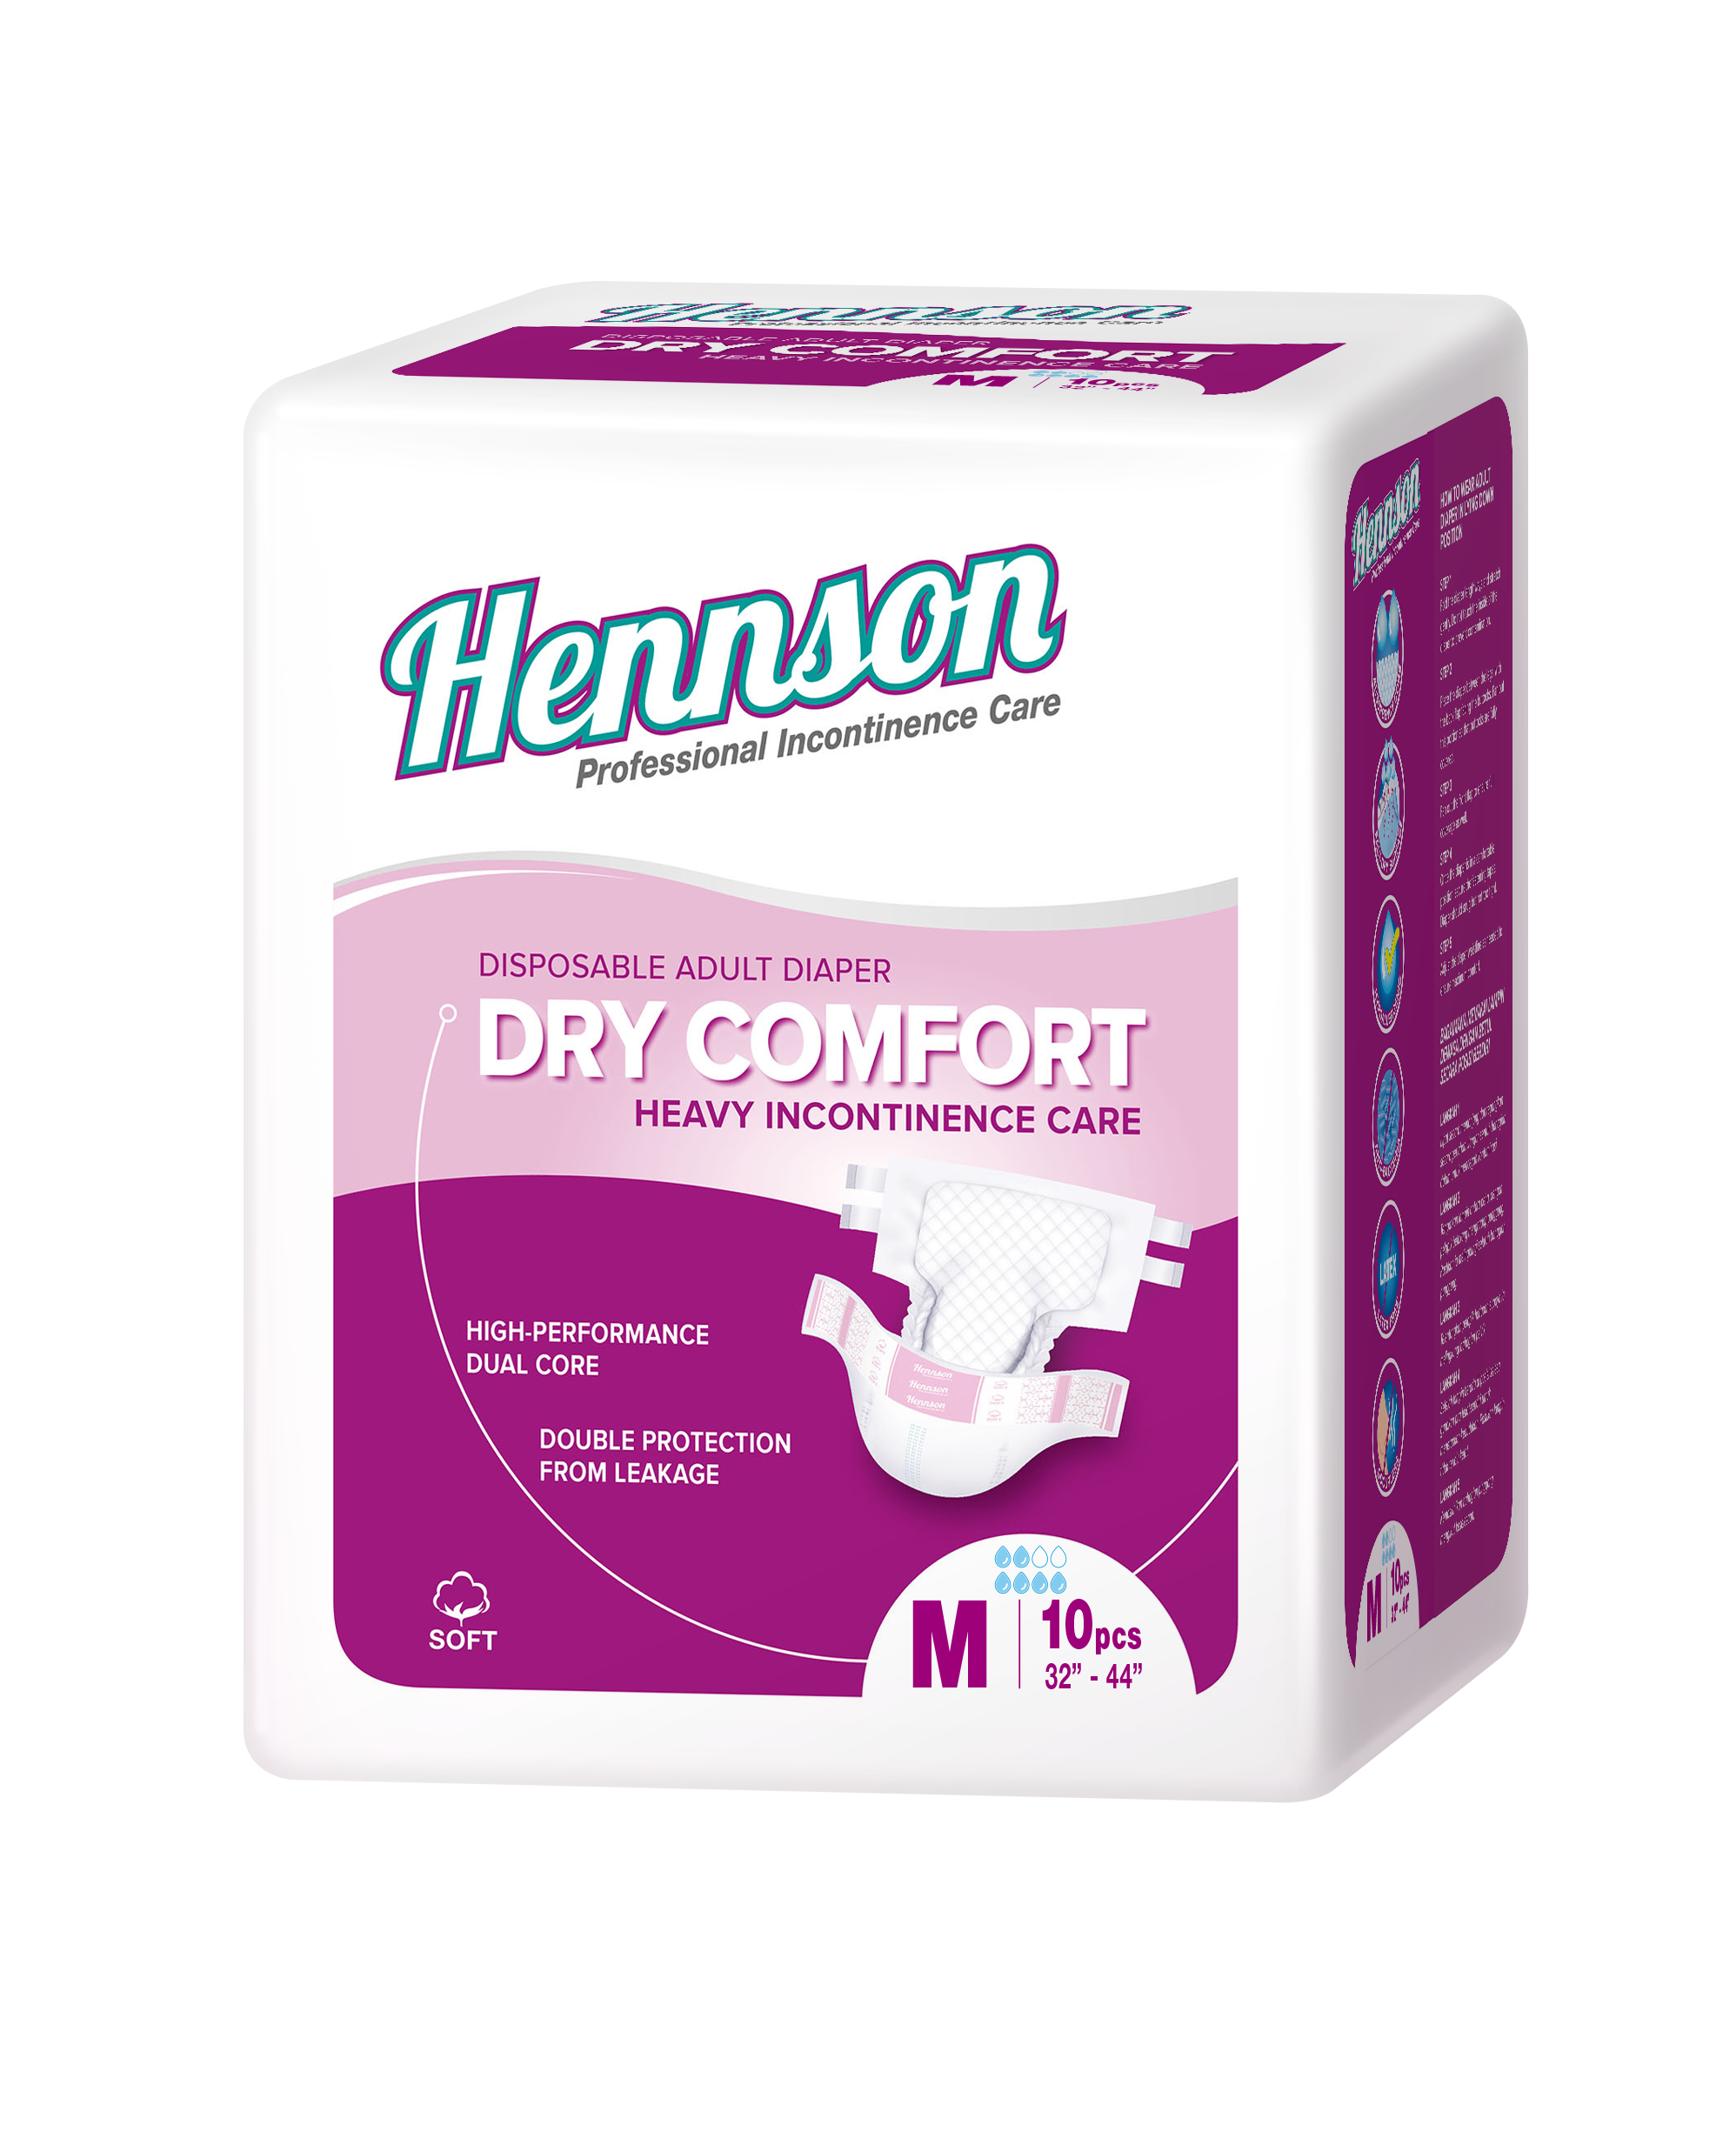 Hennson Dry Comfort Pack - M